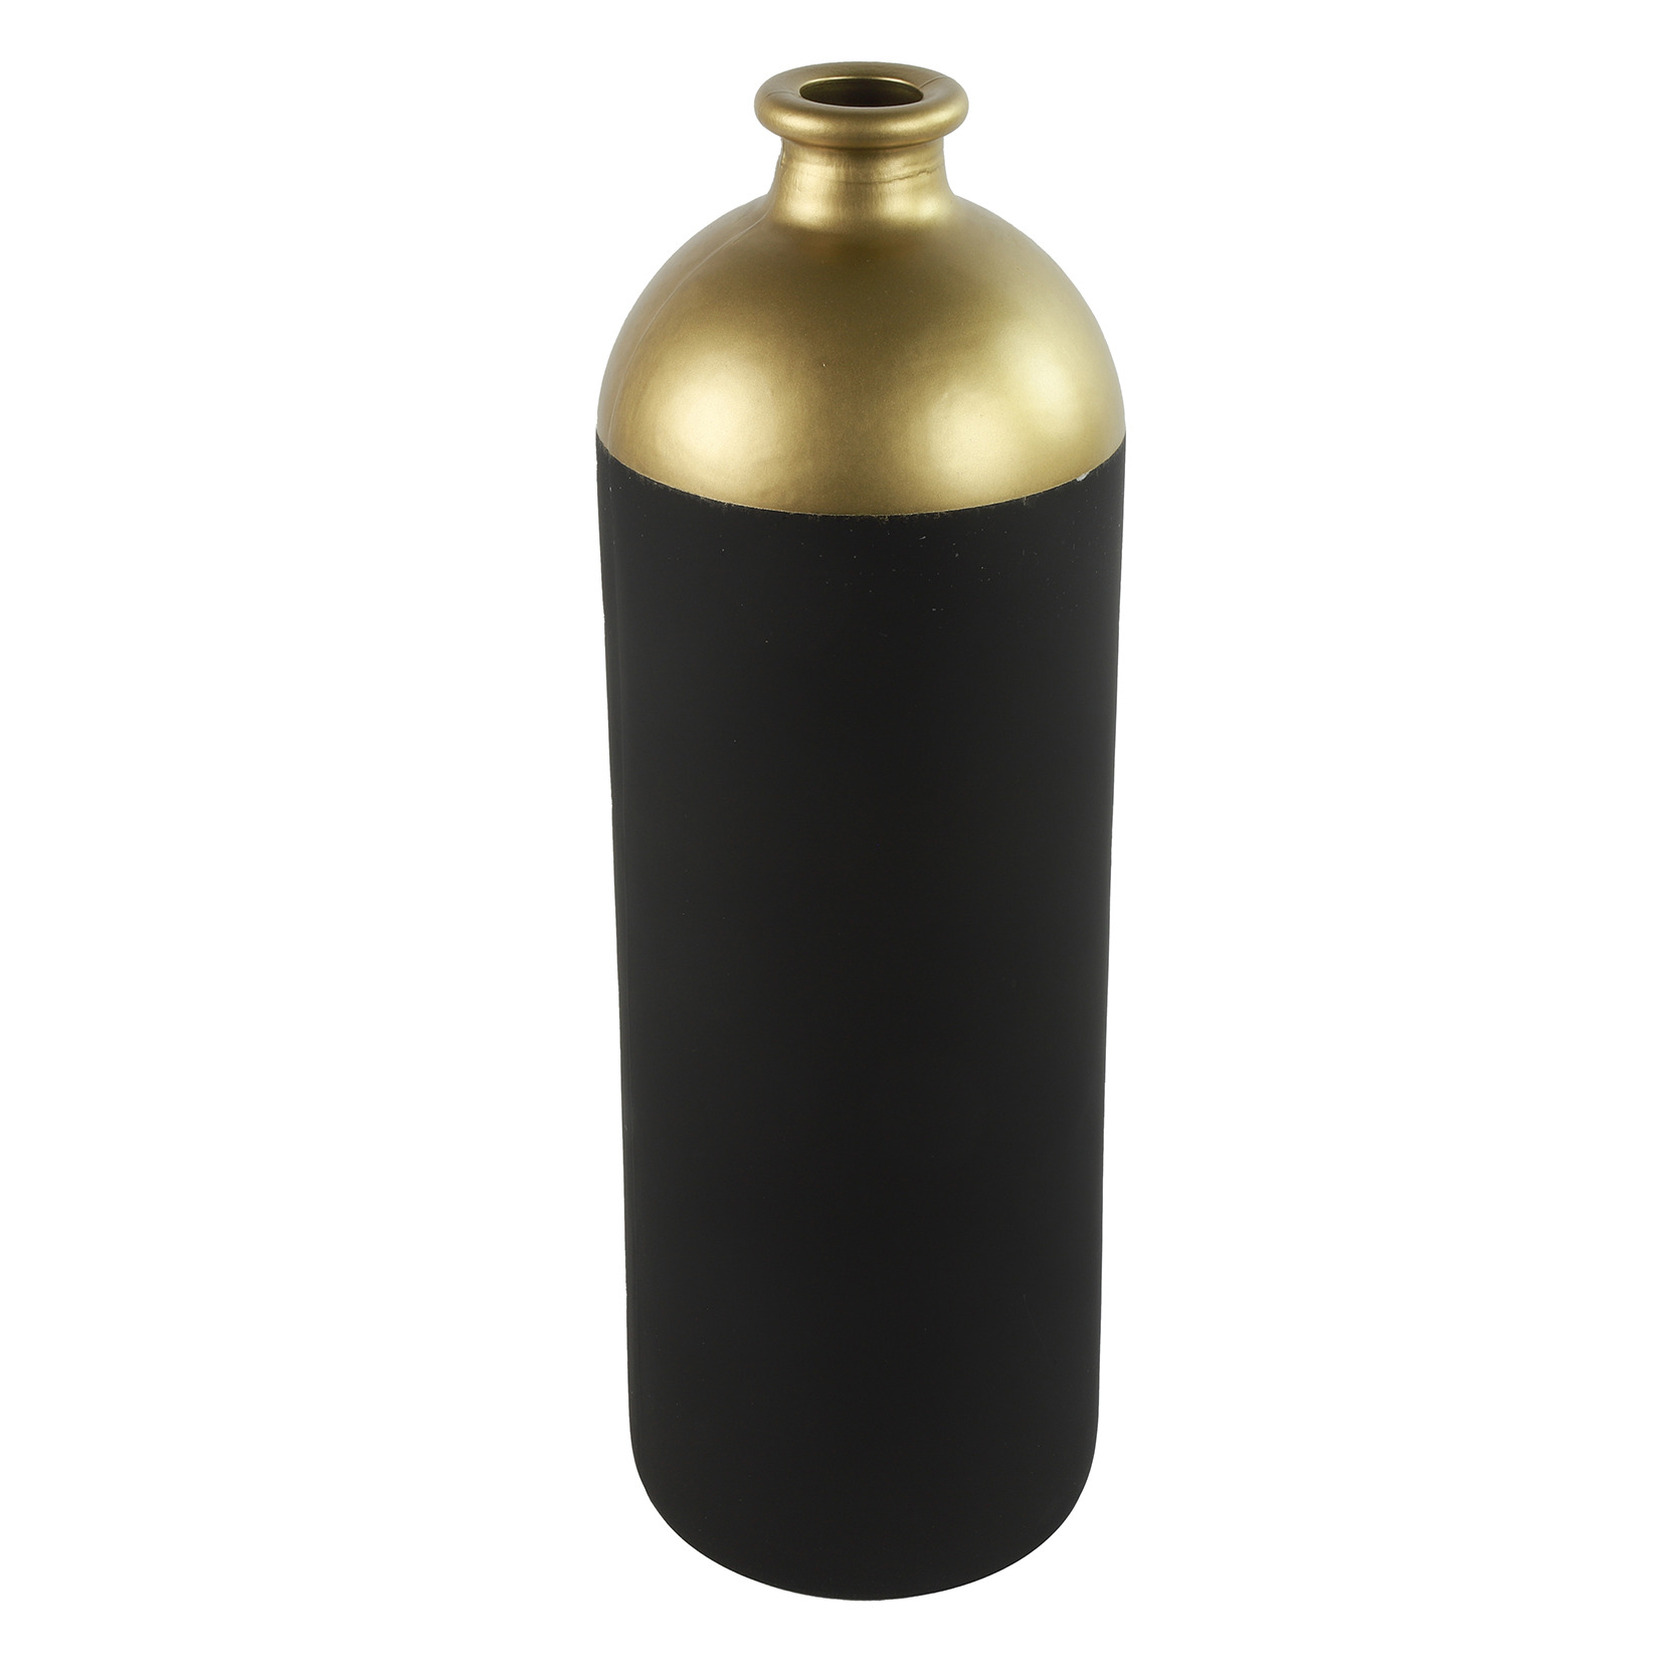 Countryfield Bloemen-deco vaas zwart-goud glas fles D13 x H41 cm